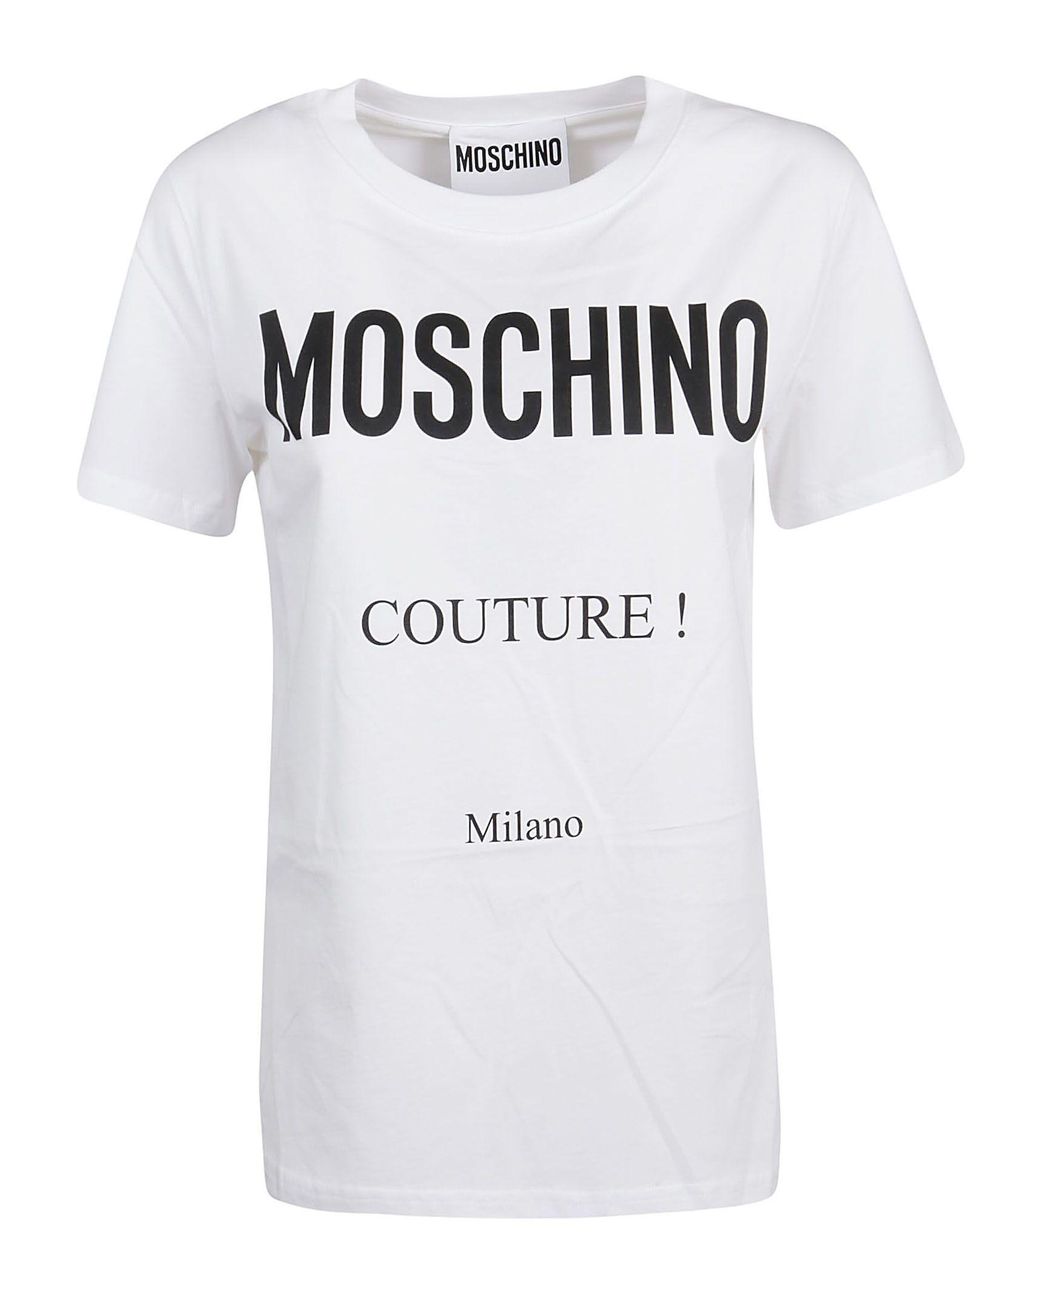 Moschino Cotton T-shirt in White - Lyst